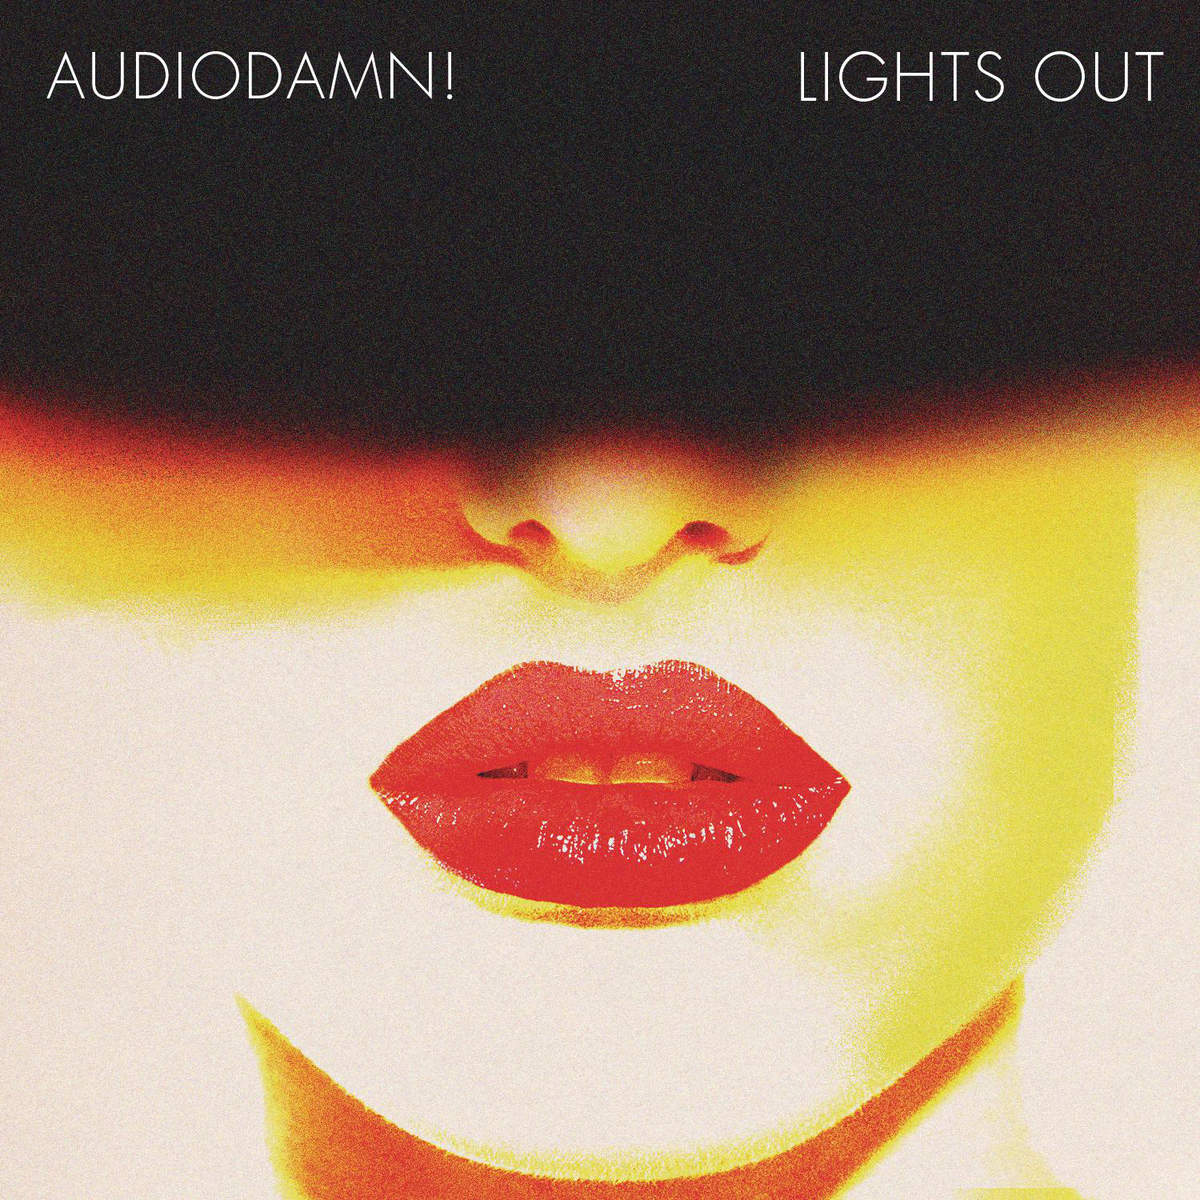 Lights Out - AudioDamn! (c) 2015 Epic